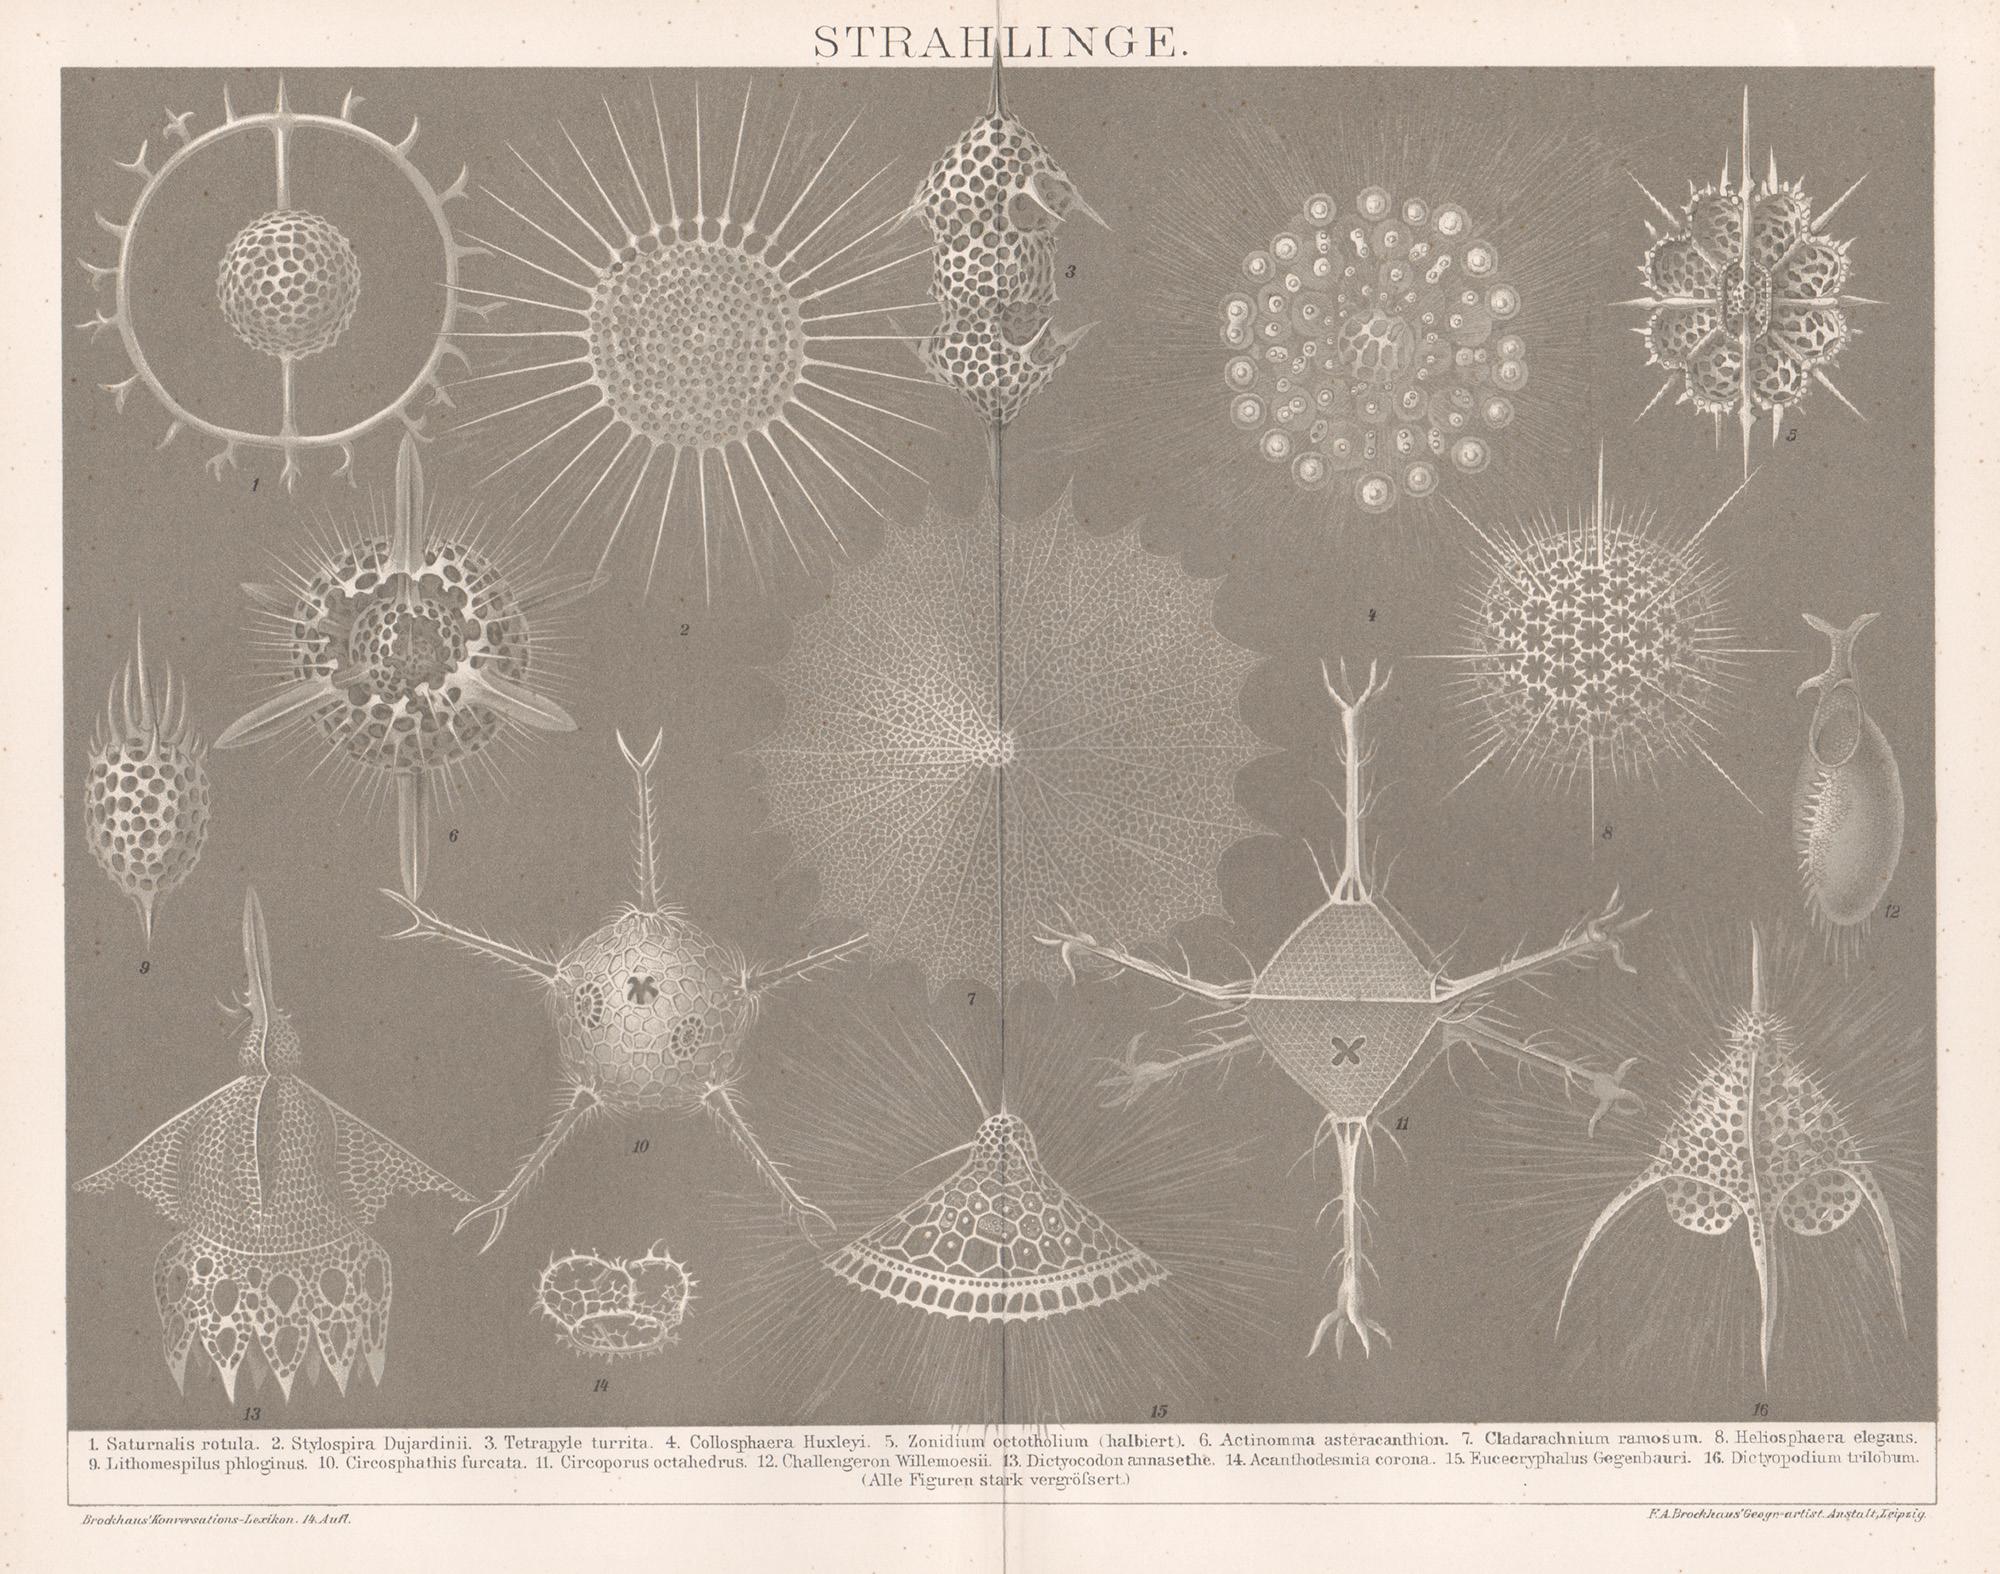 Unknown Print - Strahlinge (Protozoa - Radiolarians or Radioza) German antique lithograph print